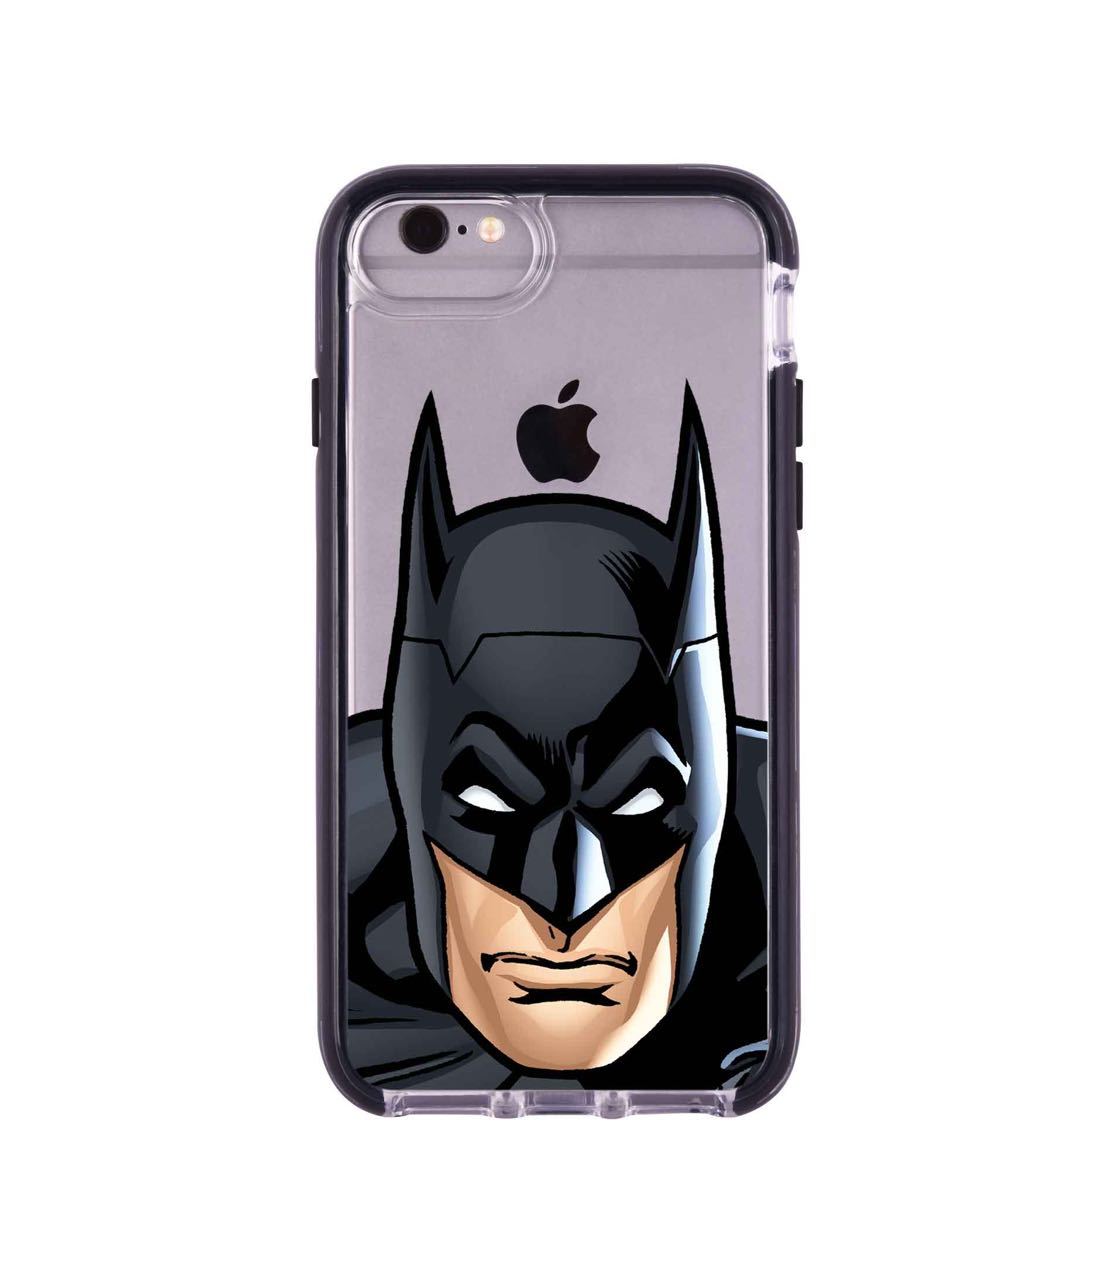 Fierce Batman - Extreme Phone Case for iPhone 6S